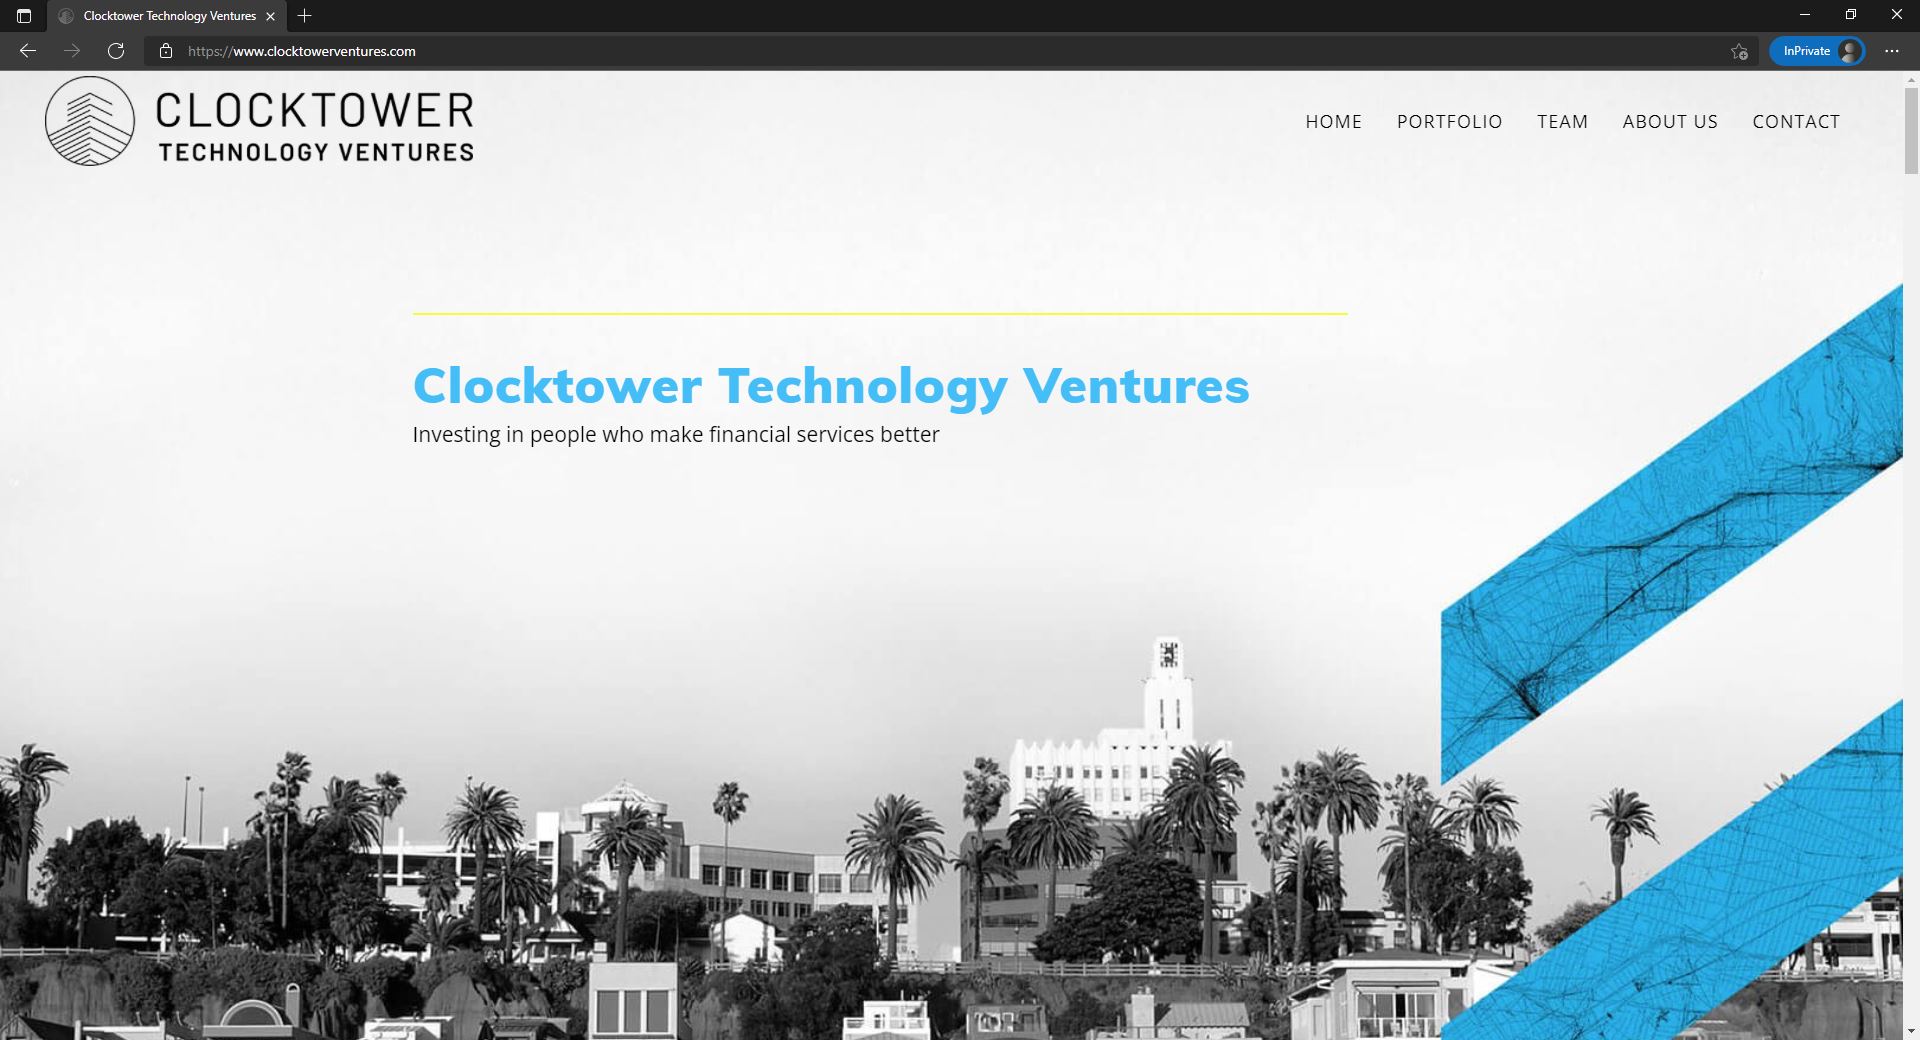 Clocktower Technology Ventures website homepage